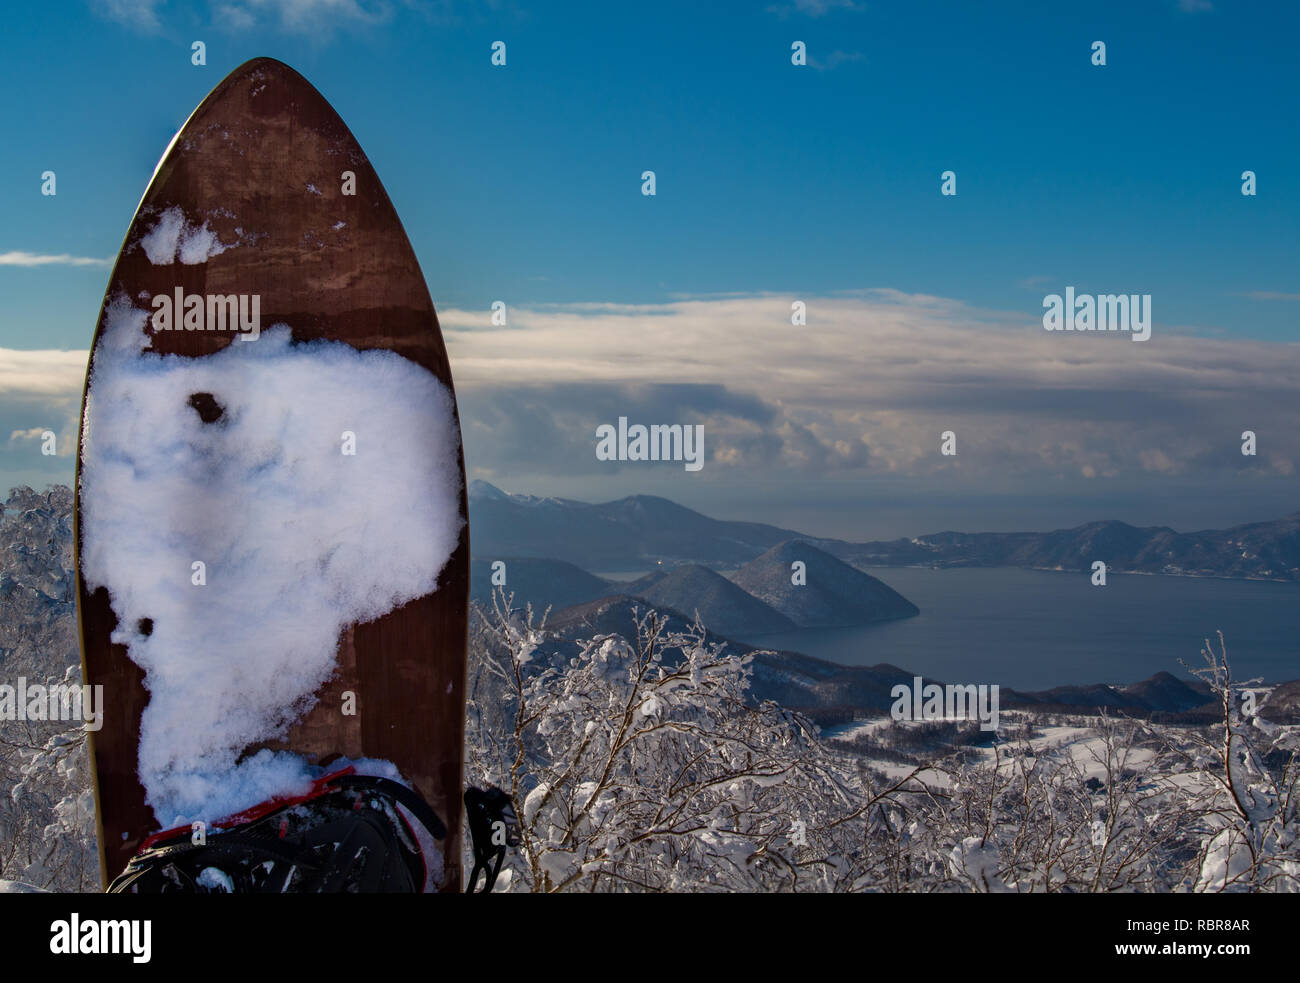 A Gentem Snowsurf board in the foreground with Lake Toya in the background at Rusutsu Ski Resort, Hokkaido, Japan. Stock Photo